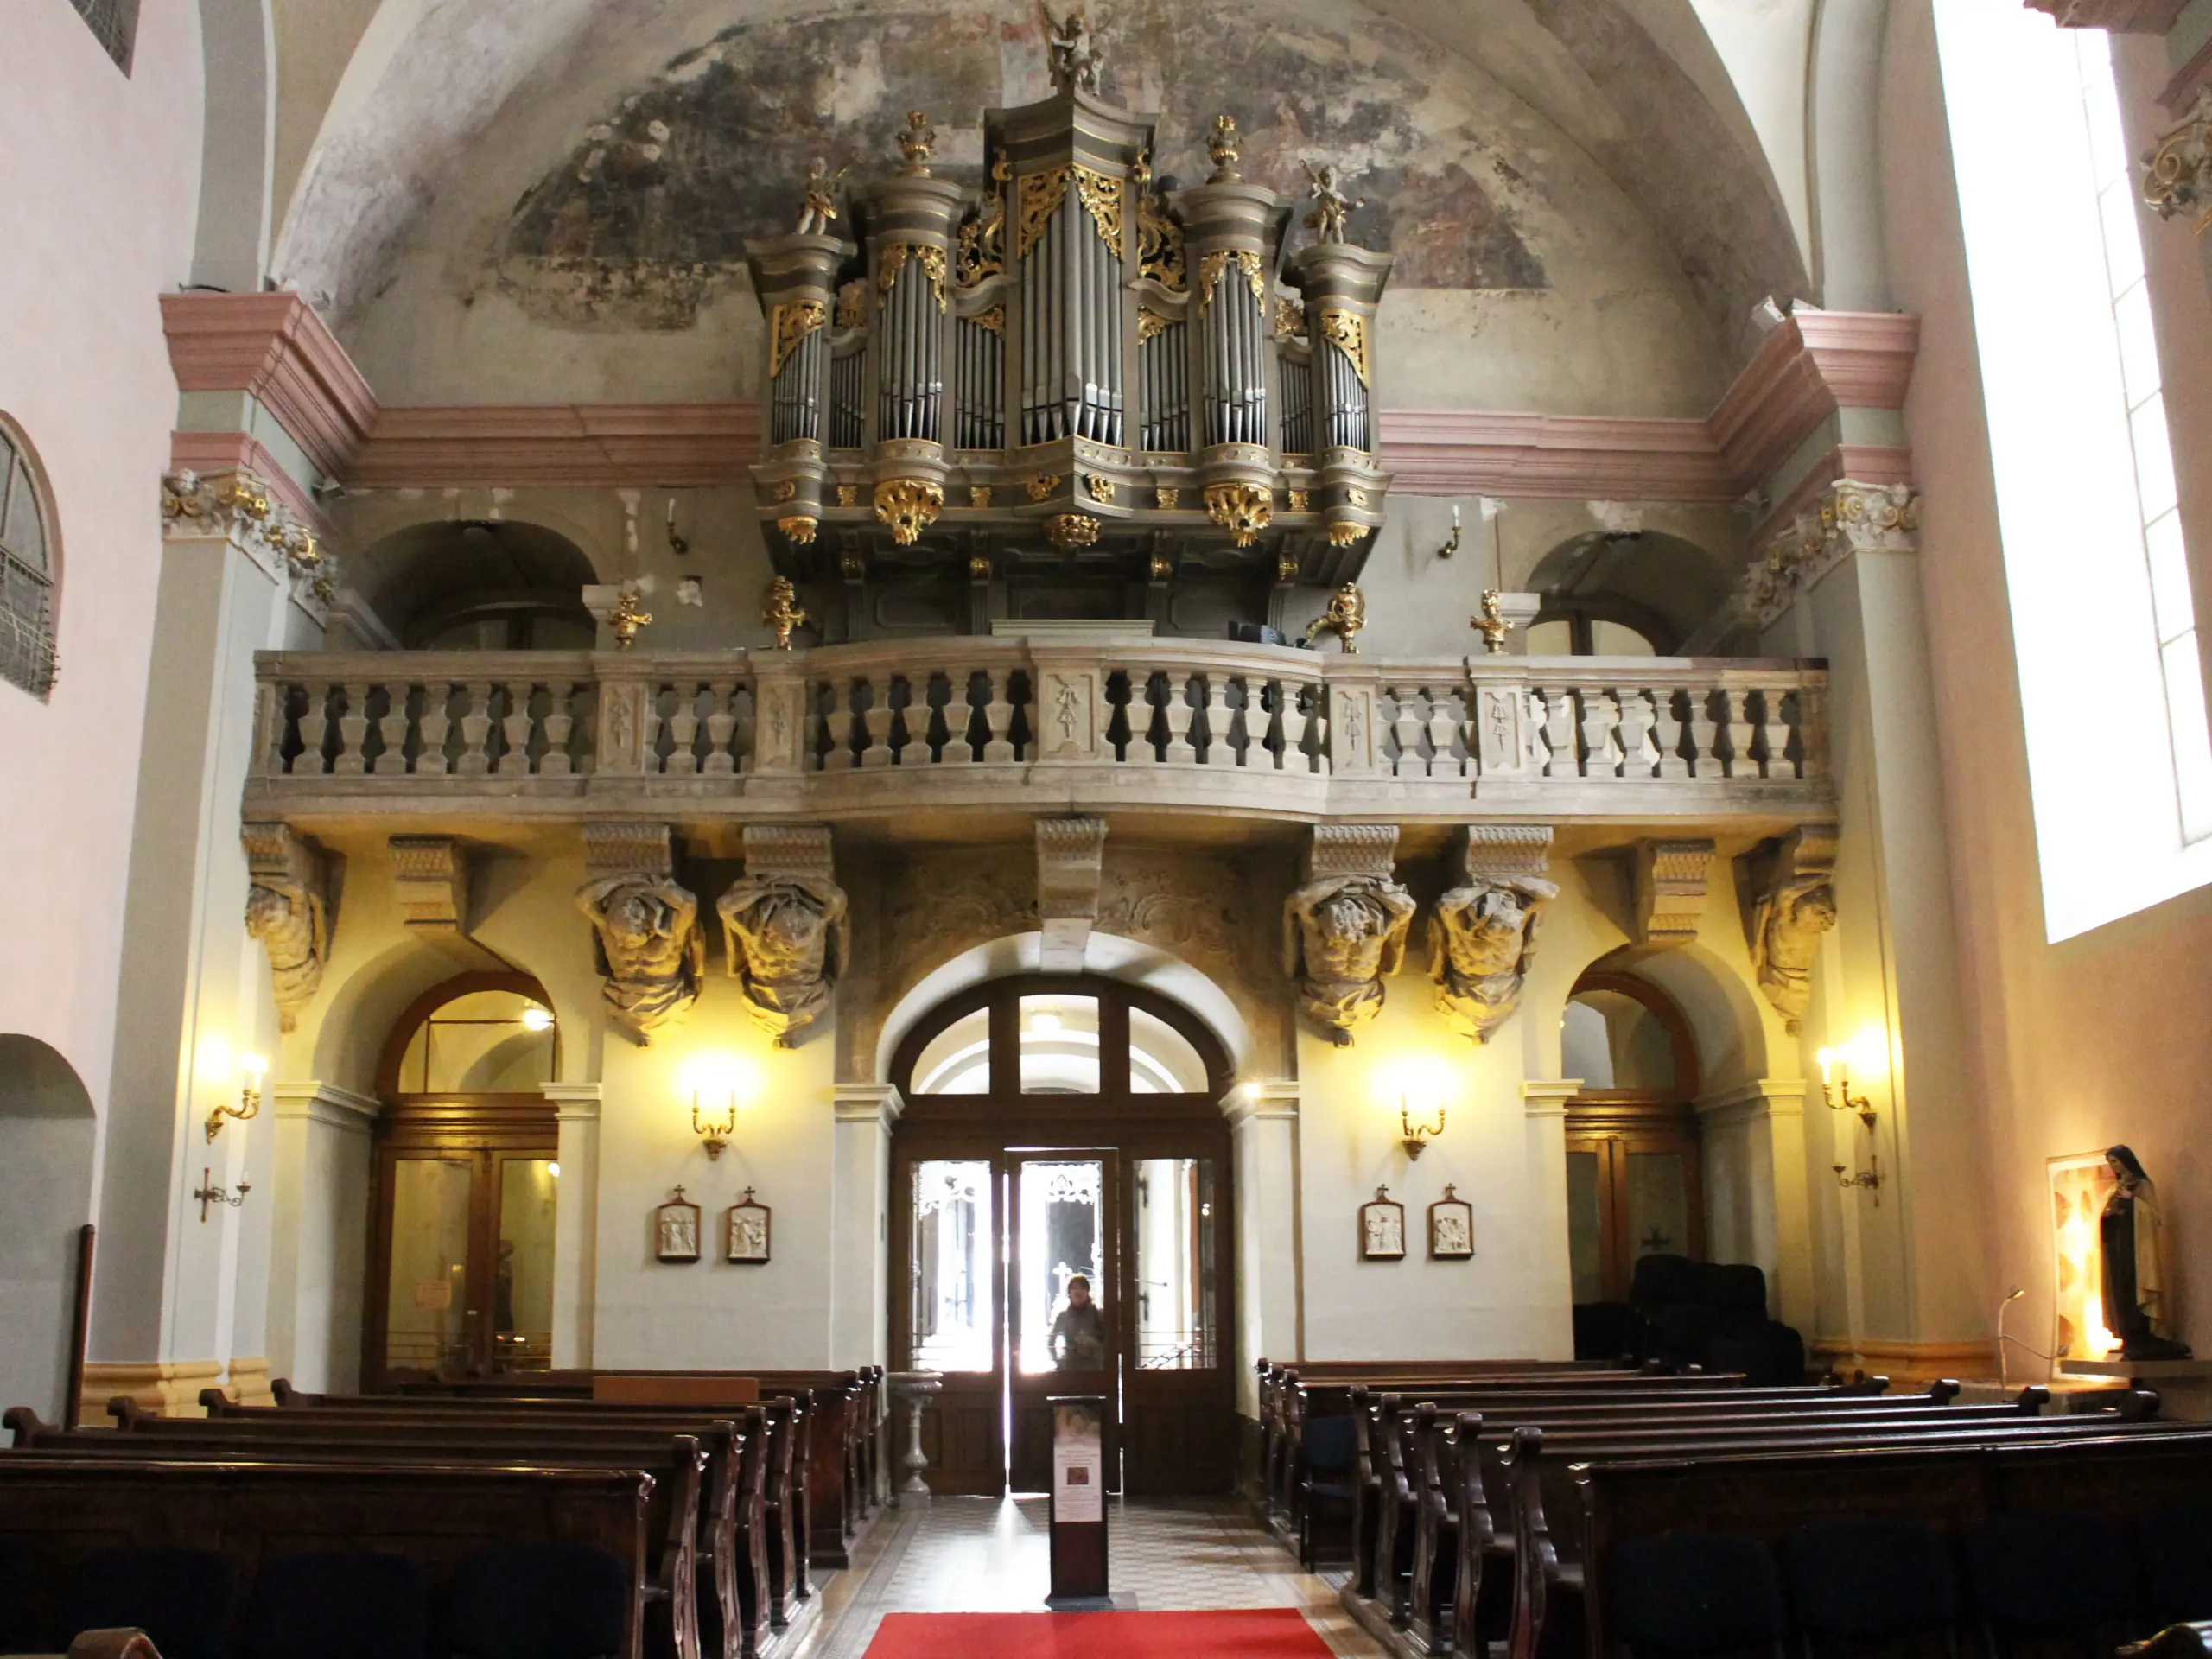 the organ of St. Michael Church